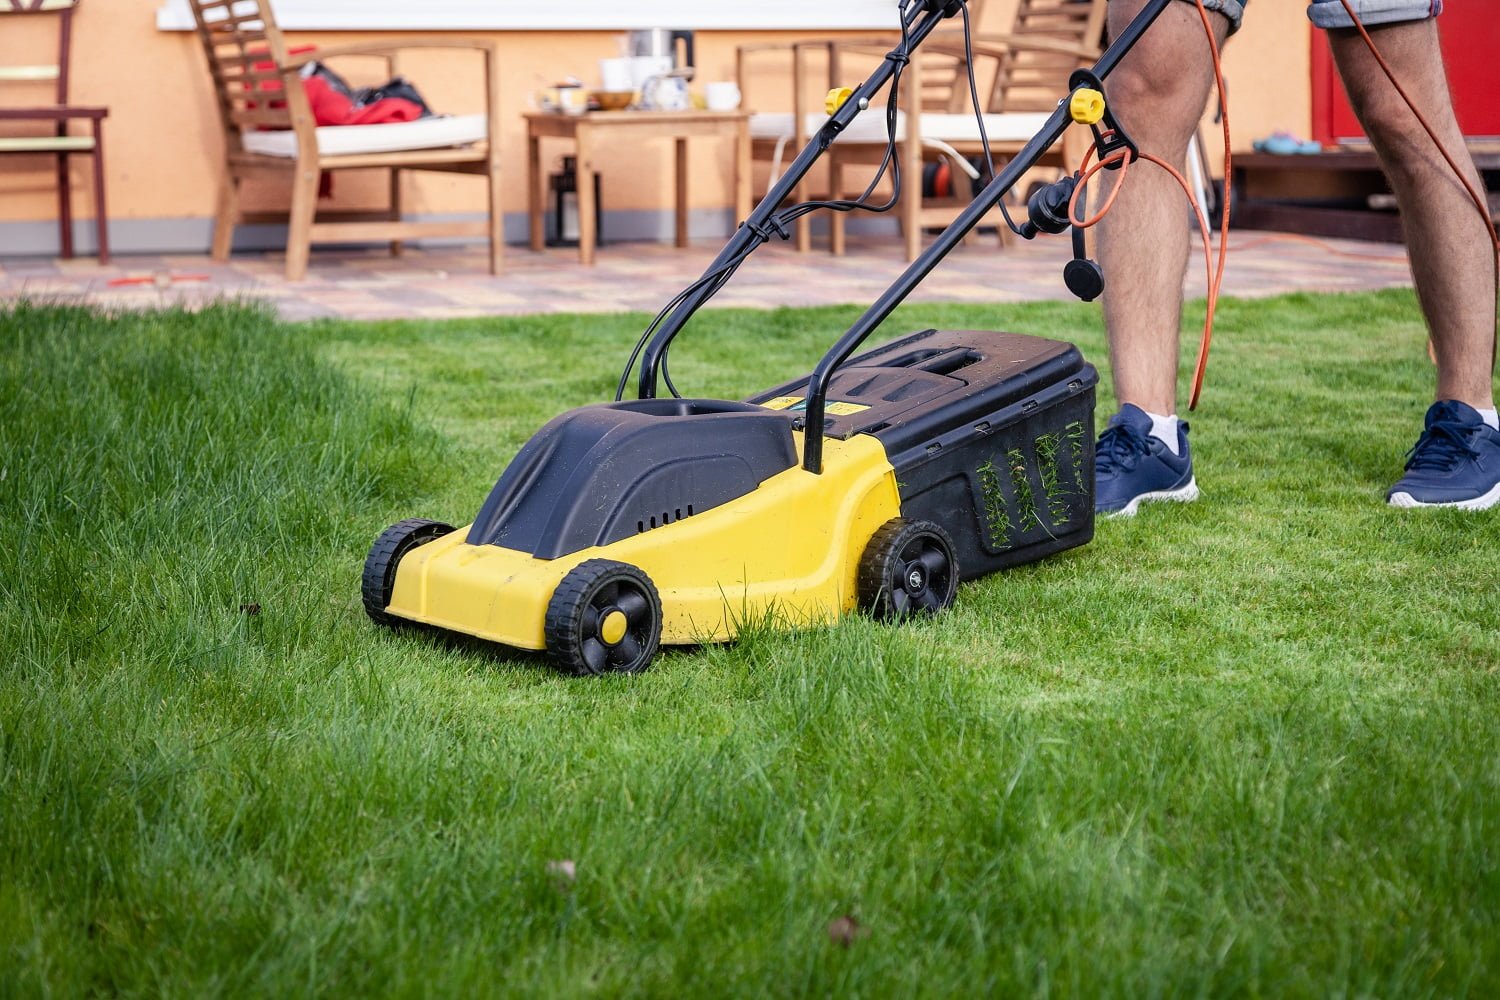 Lawn mower, green grass, equipment, mowing, gardener, care, work, tool, home, housekeeper on work